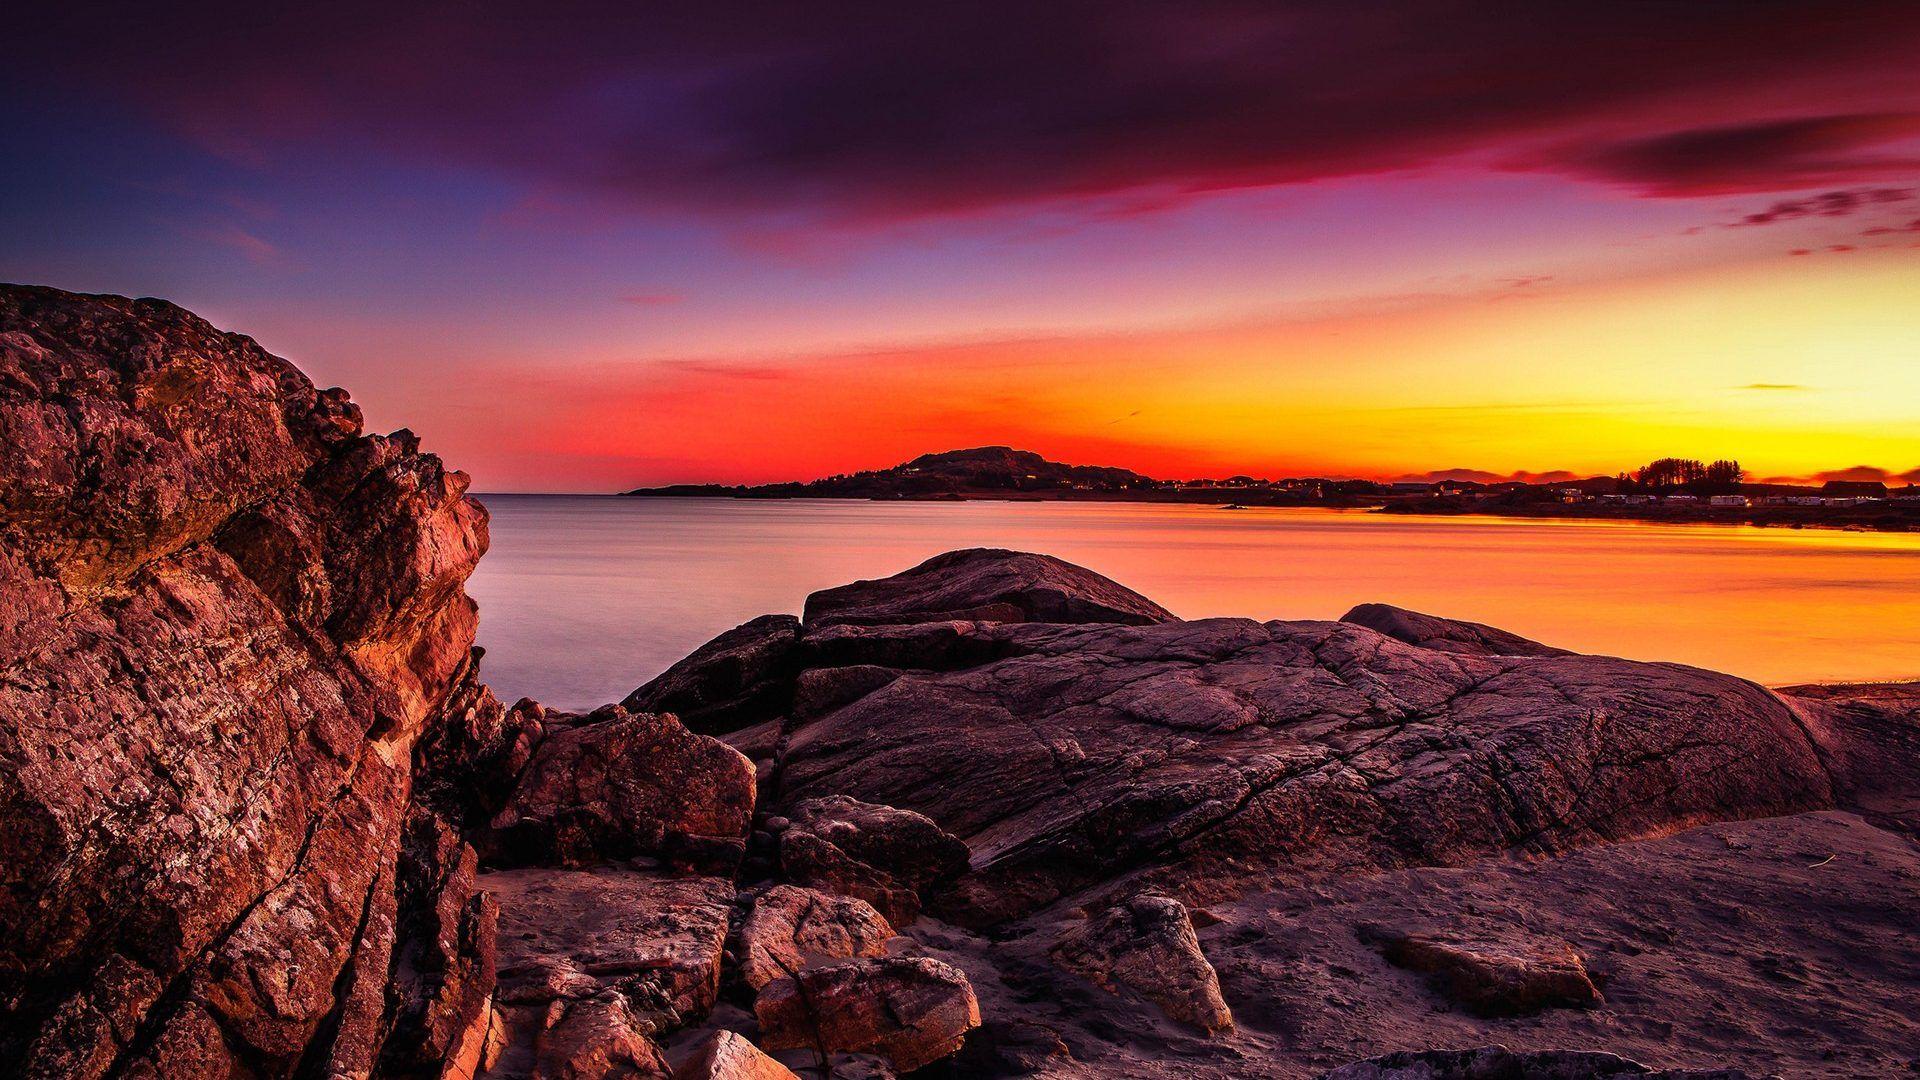 Sunrise Sunset: Sky Sunset Rocks Beaches Ocean Stones Best Nature